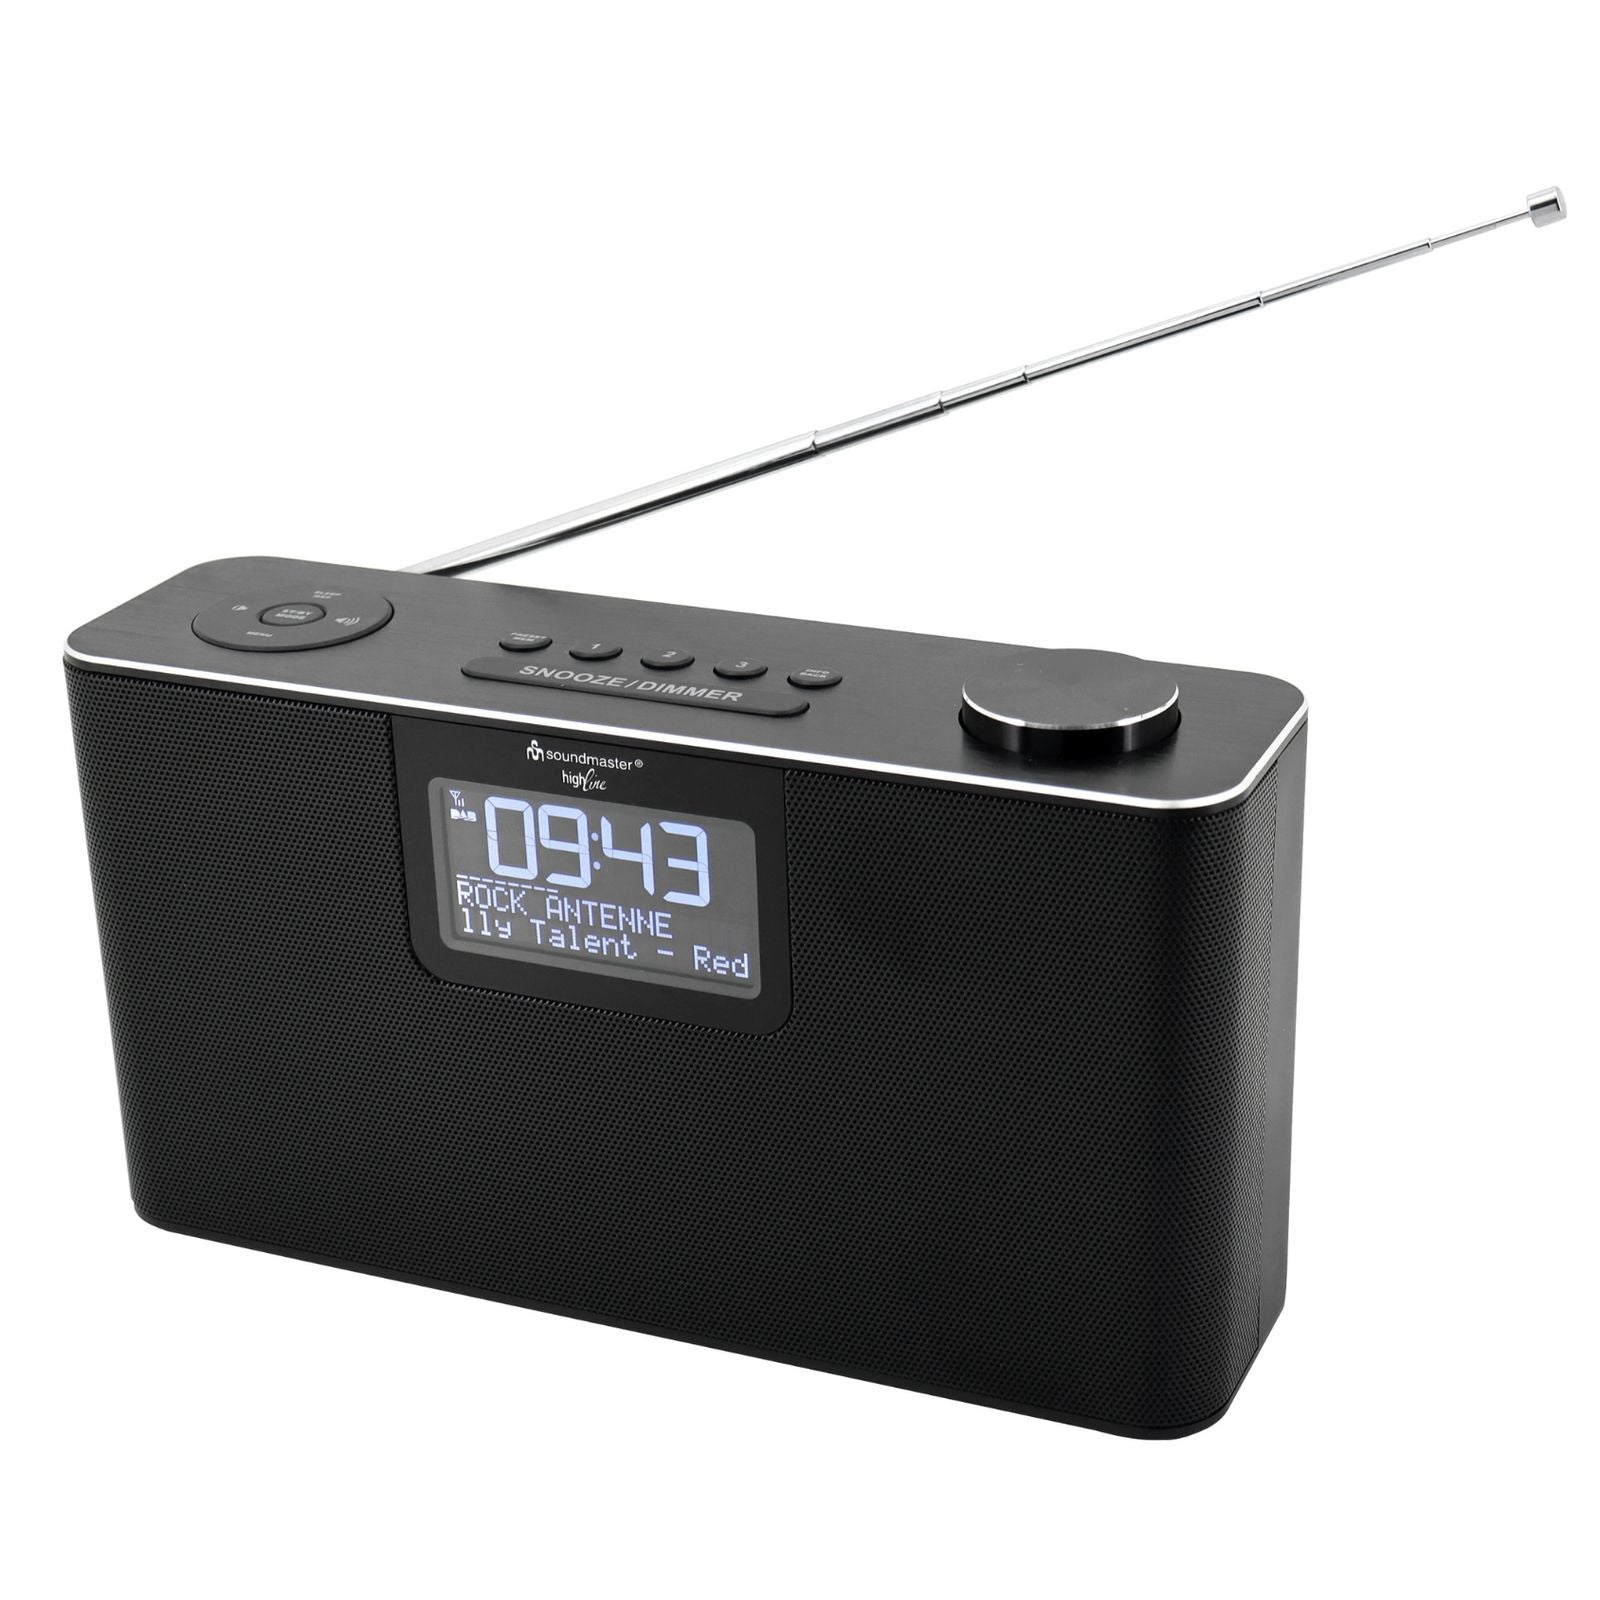 Soundmaster HighLine DAB700SW portable radio Boombox DAB+ FM with USB SD Bluetooth